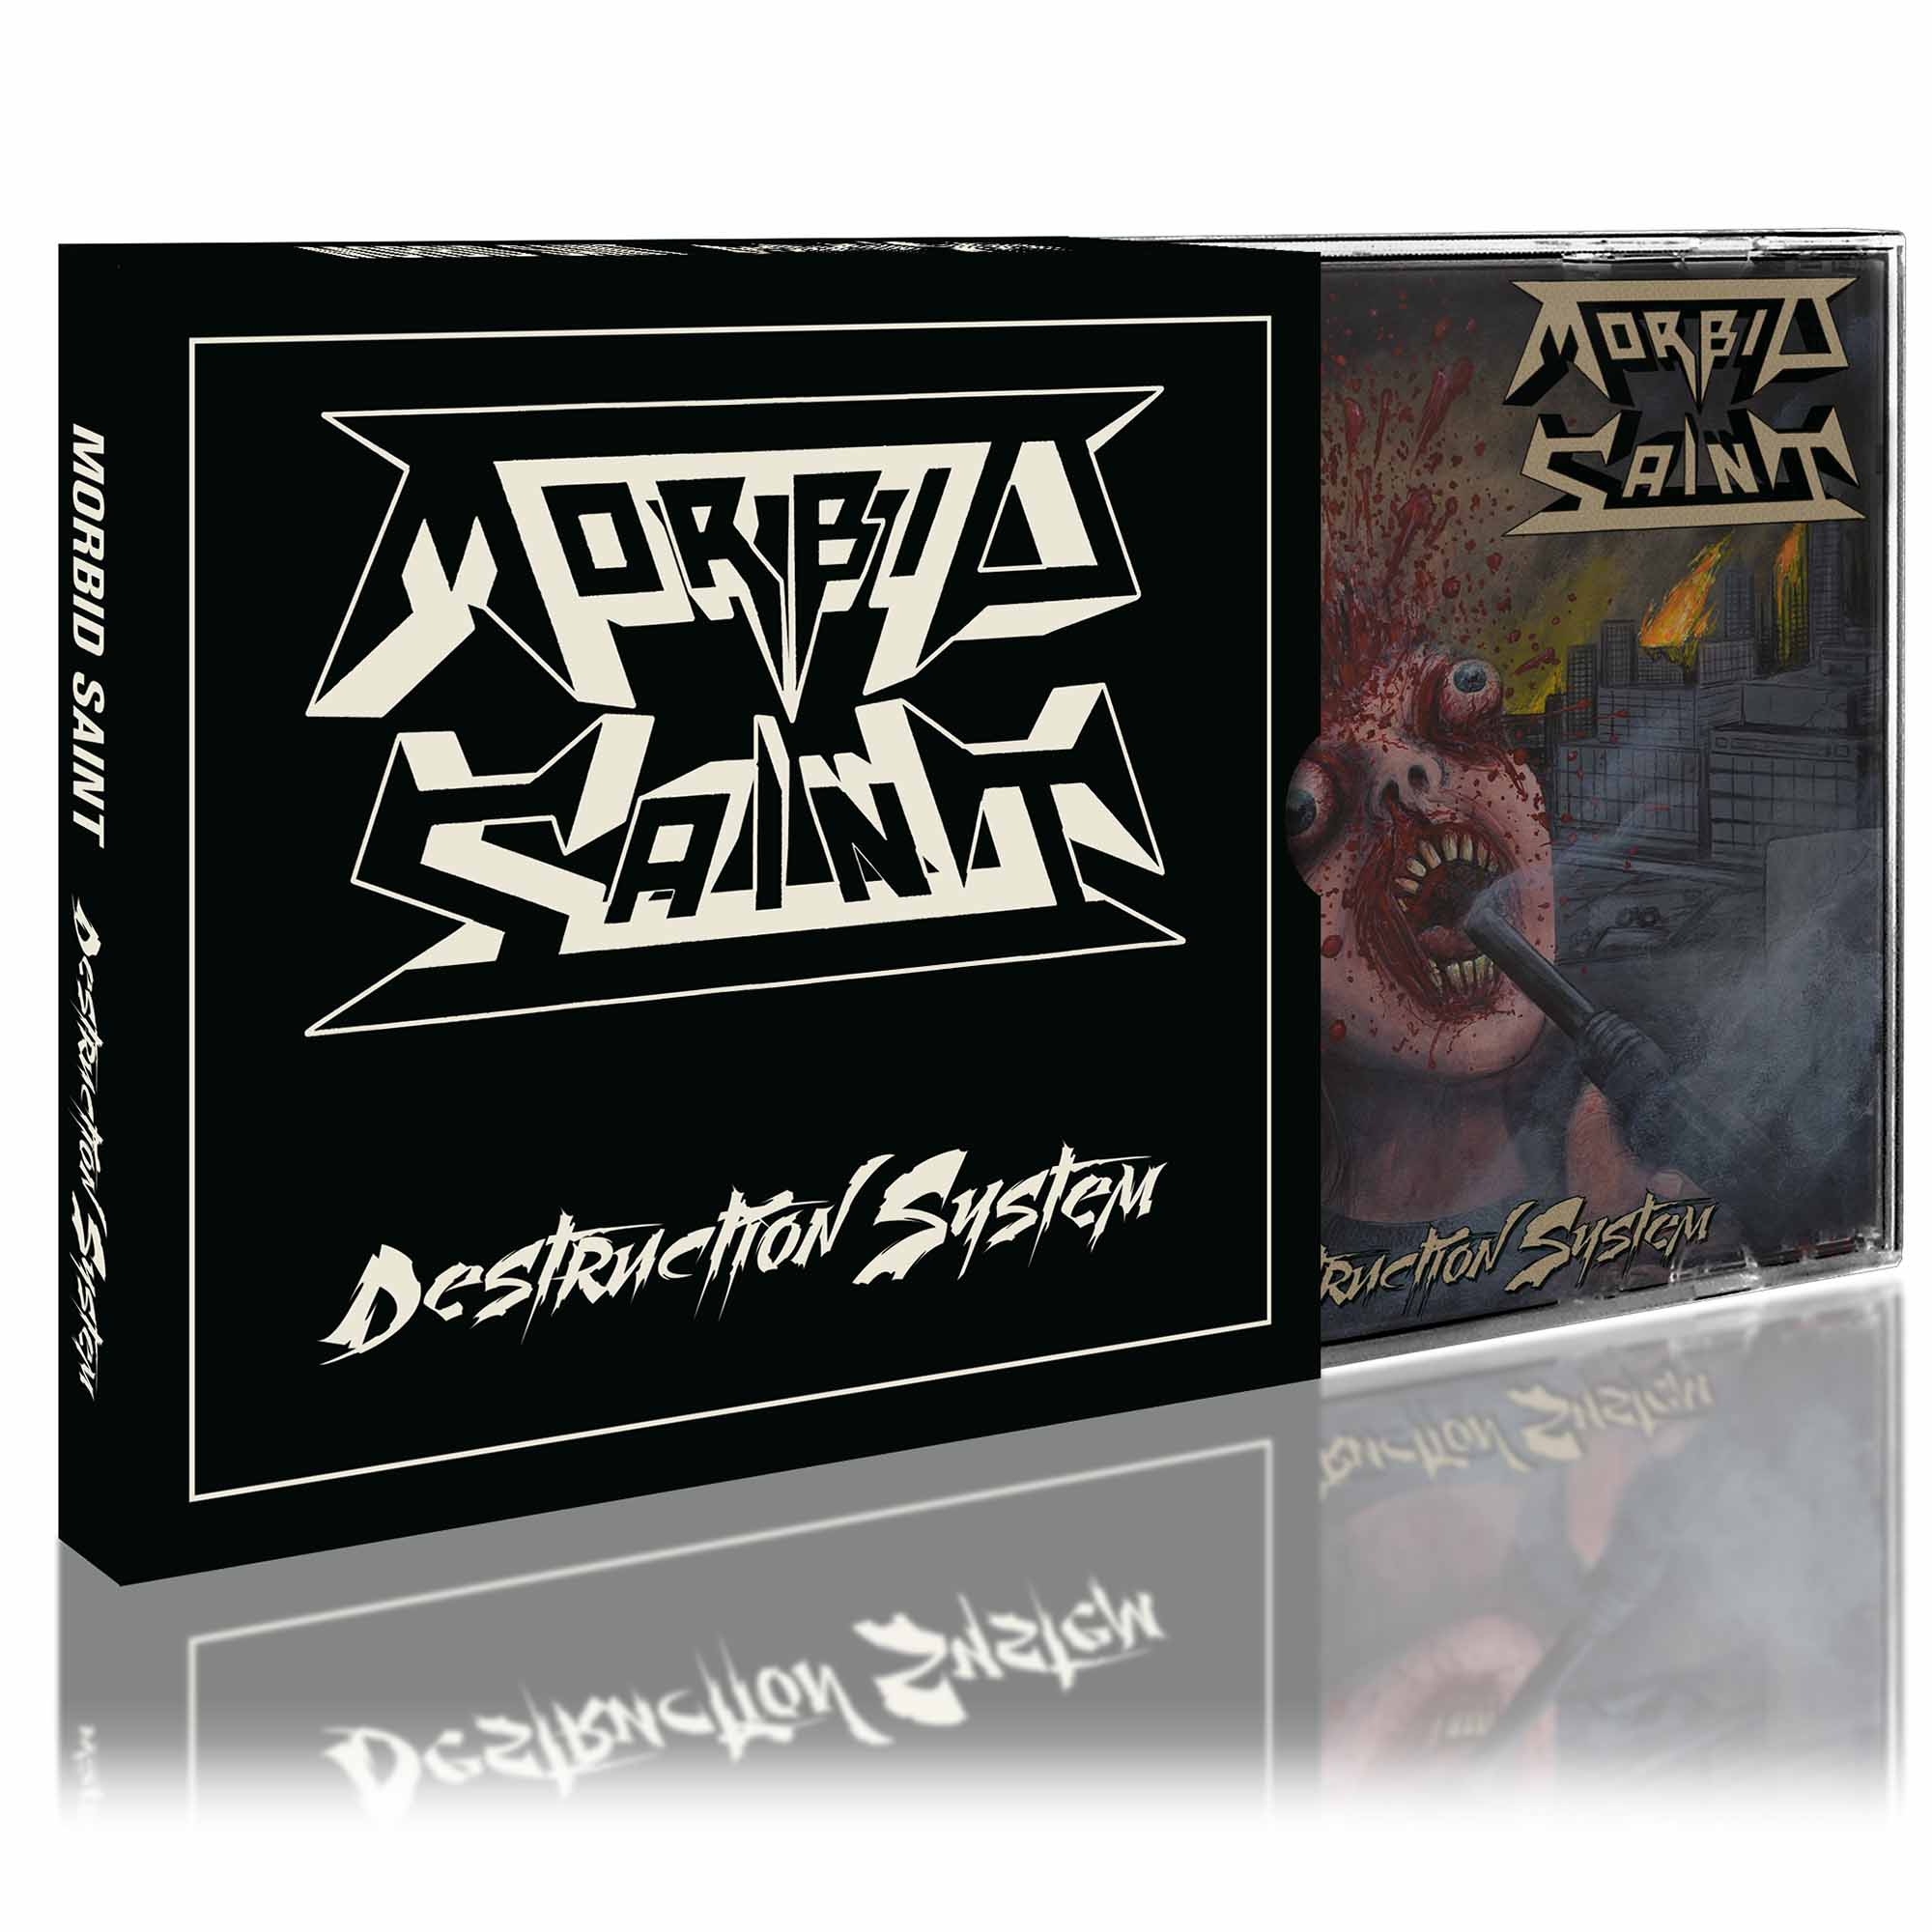 MORBID SAINT - Destruction System  CD